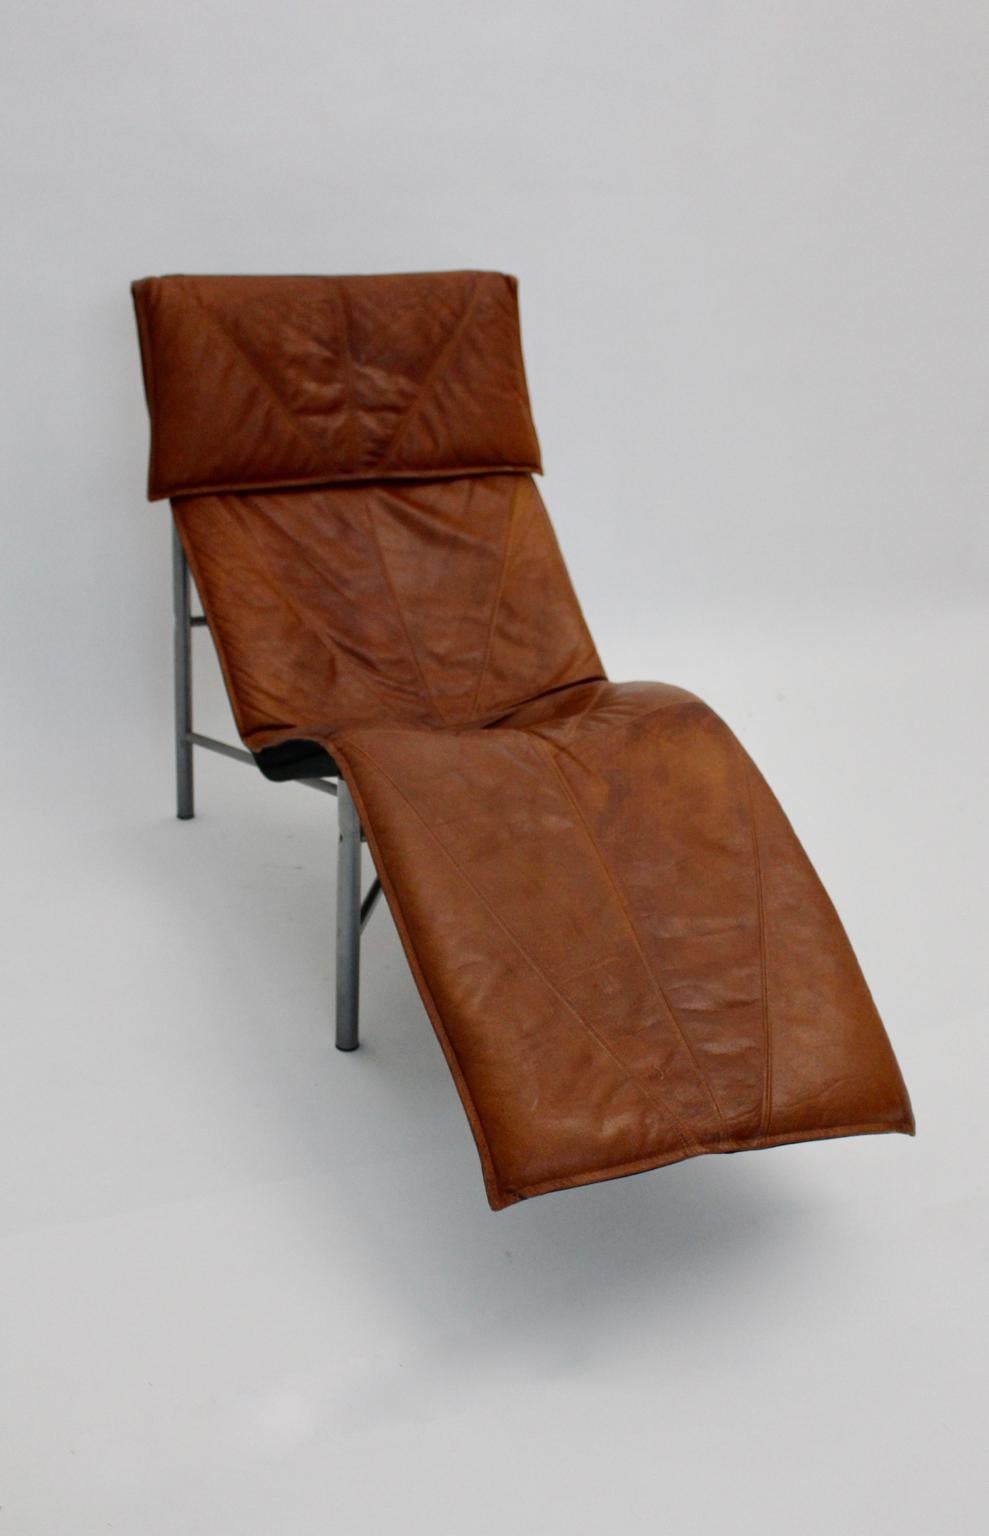 Metal Vintage Cognac Leather Chaise Longue by Tord Bjorklund Sweden, 1970 For Sale